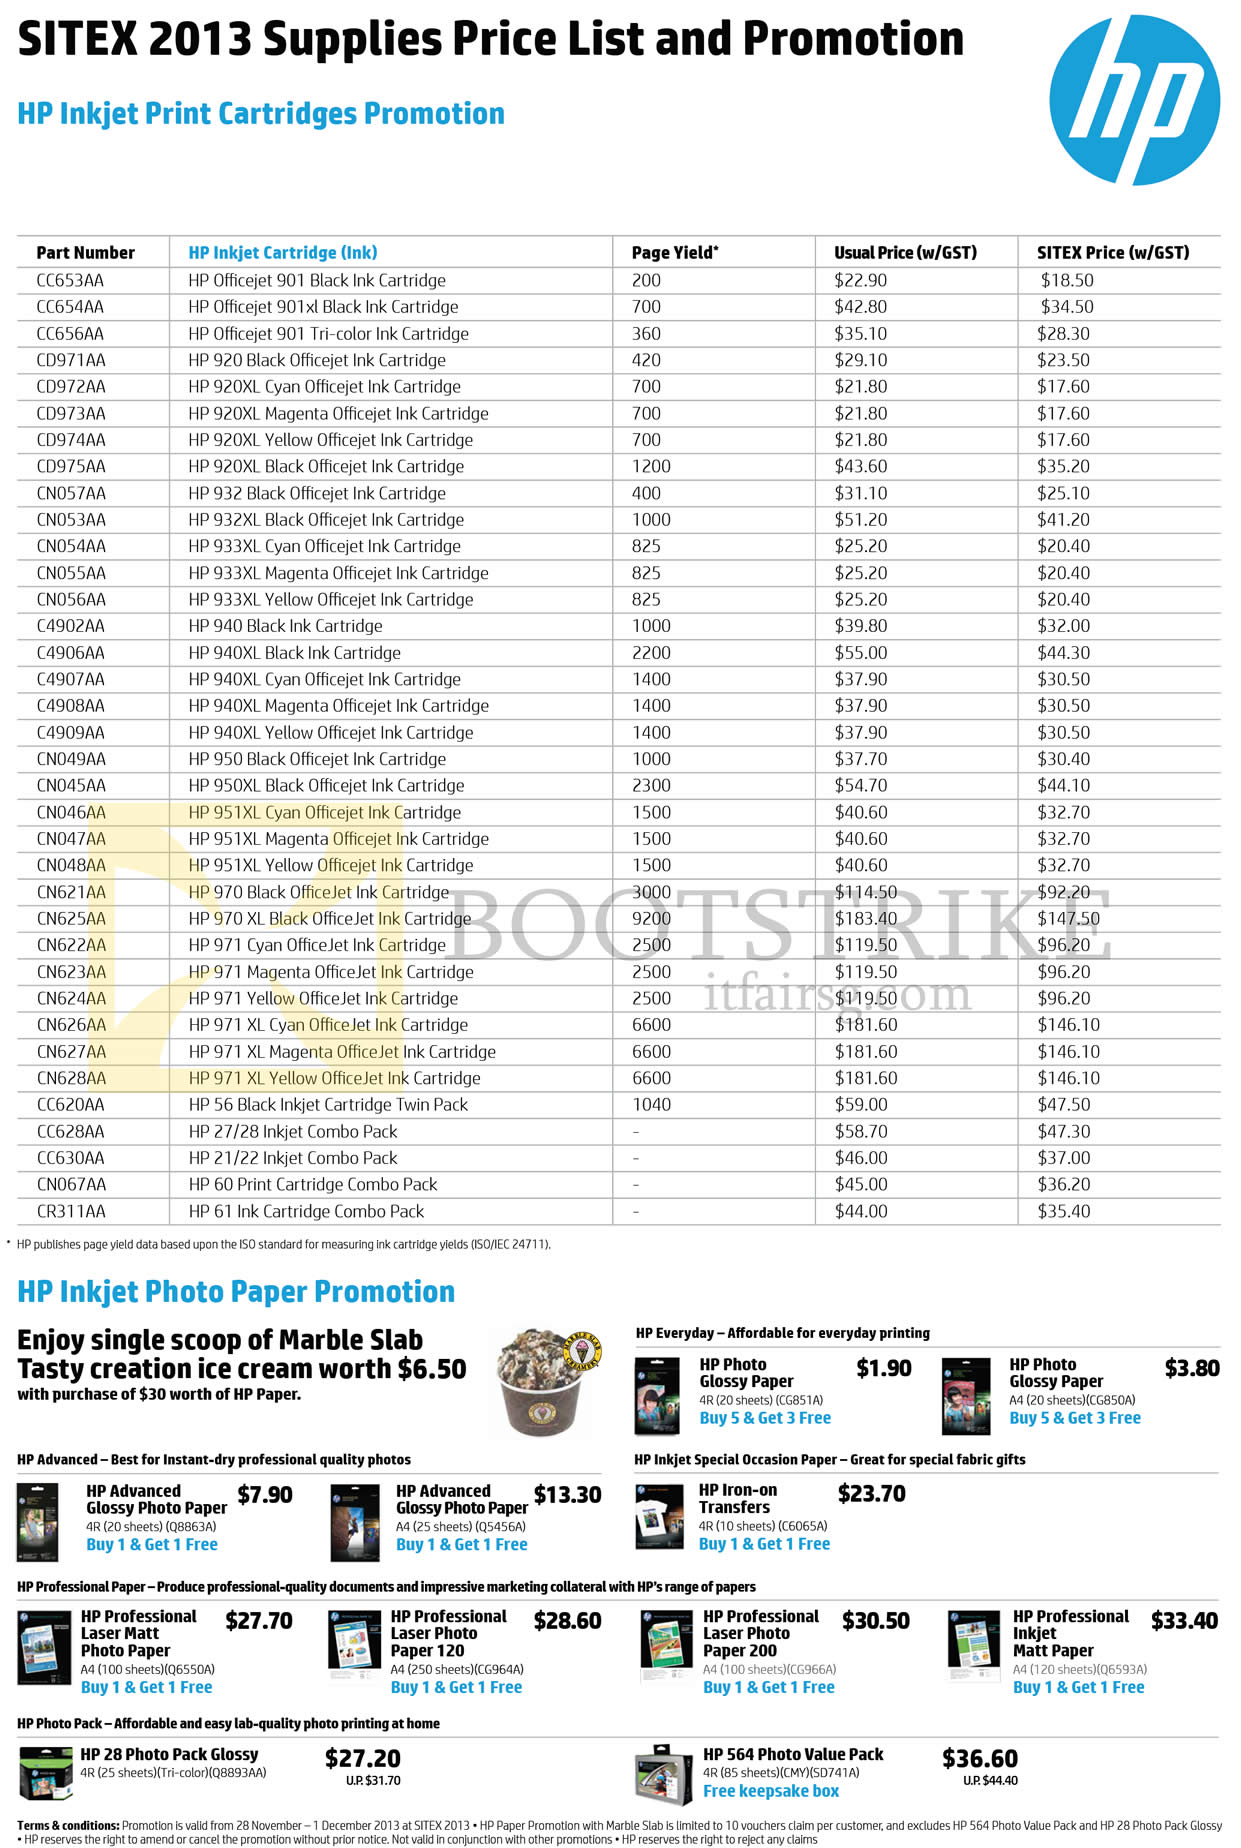 SITEX 2013 price list image brochure of HP Printers Ink Cartridge Price List, Photo Paper